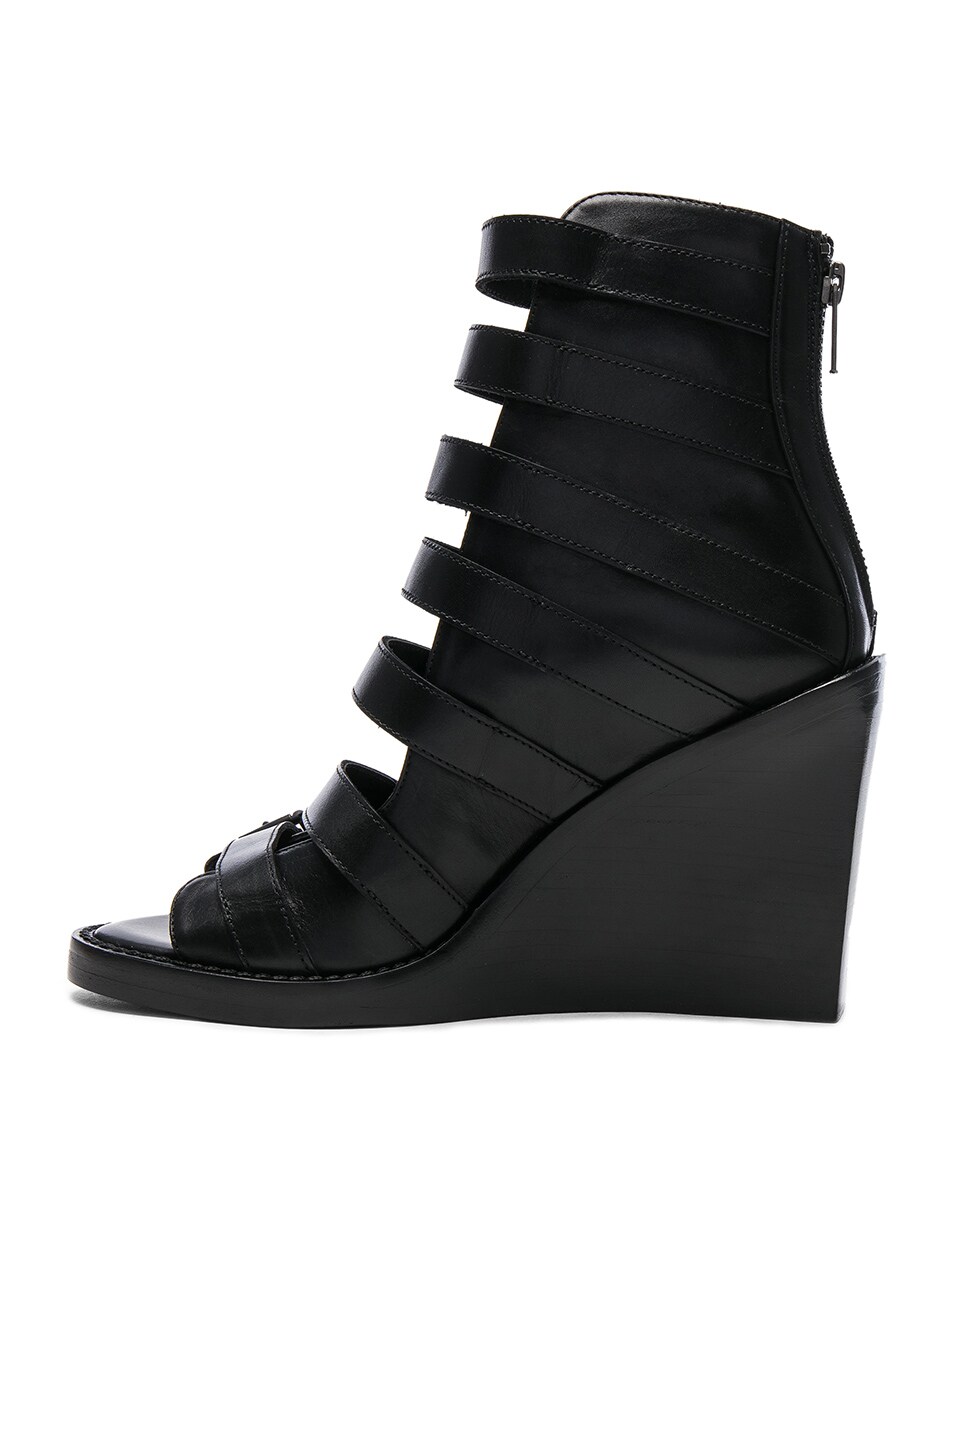 ANN DEMEULEMEESTER Buckled Leather Wedge Sandals, Black & Black | ModeSens